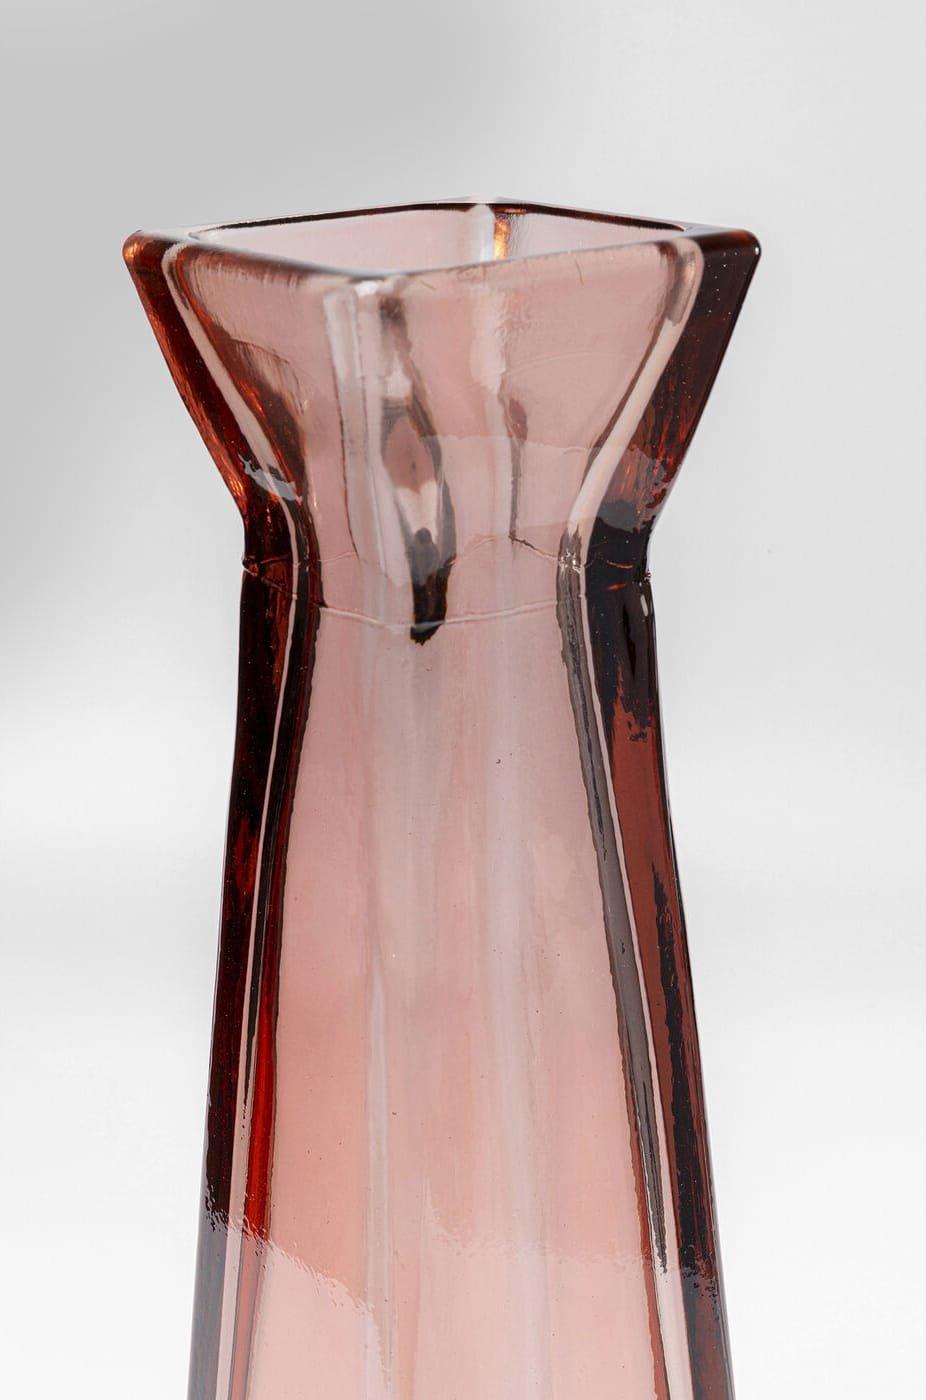 KARE Design Vase Piramide rosa 55  